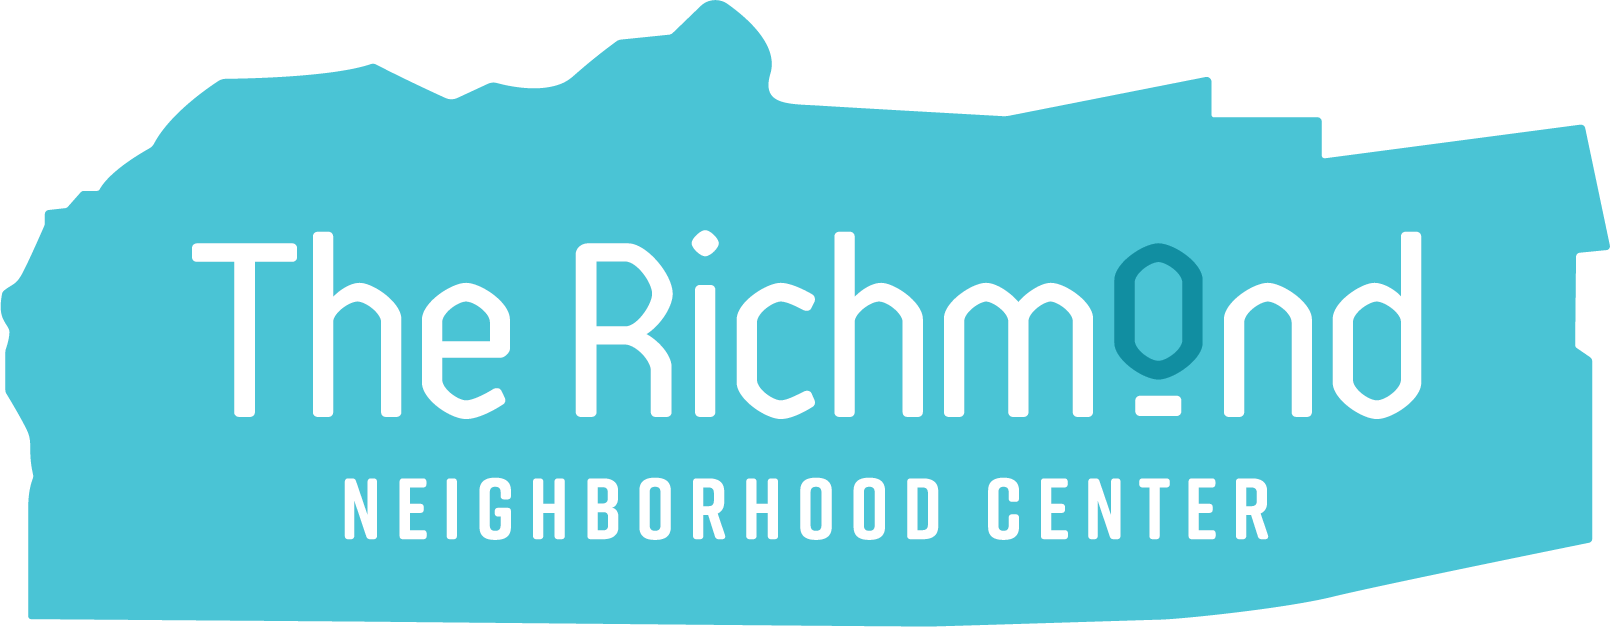 The Richmond Neighborhood Center